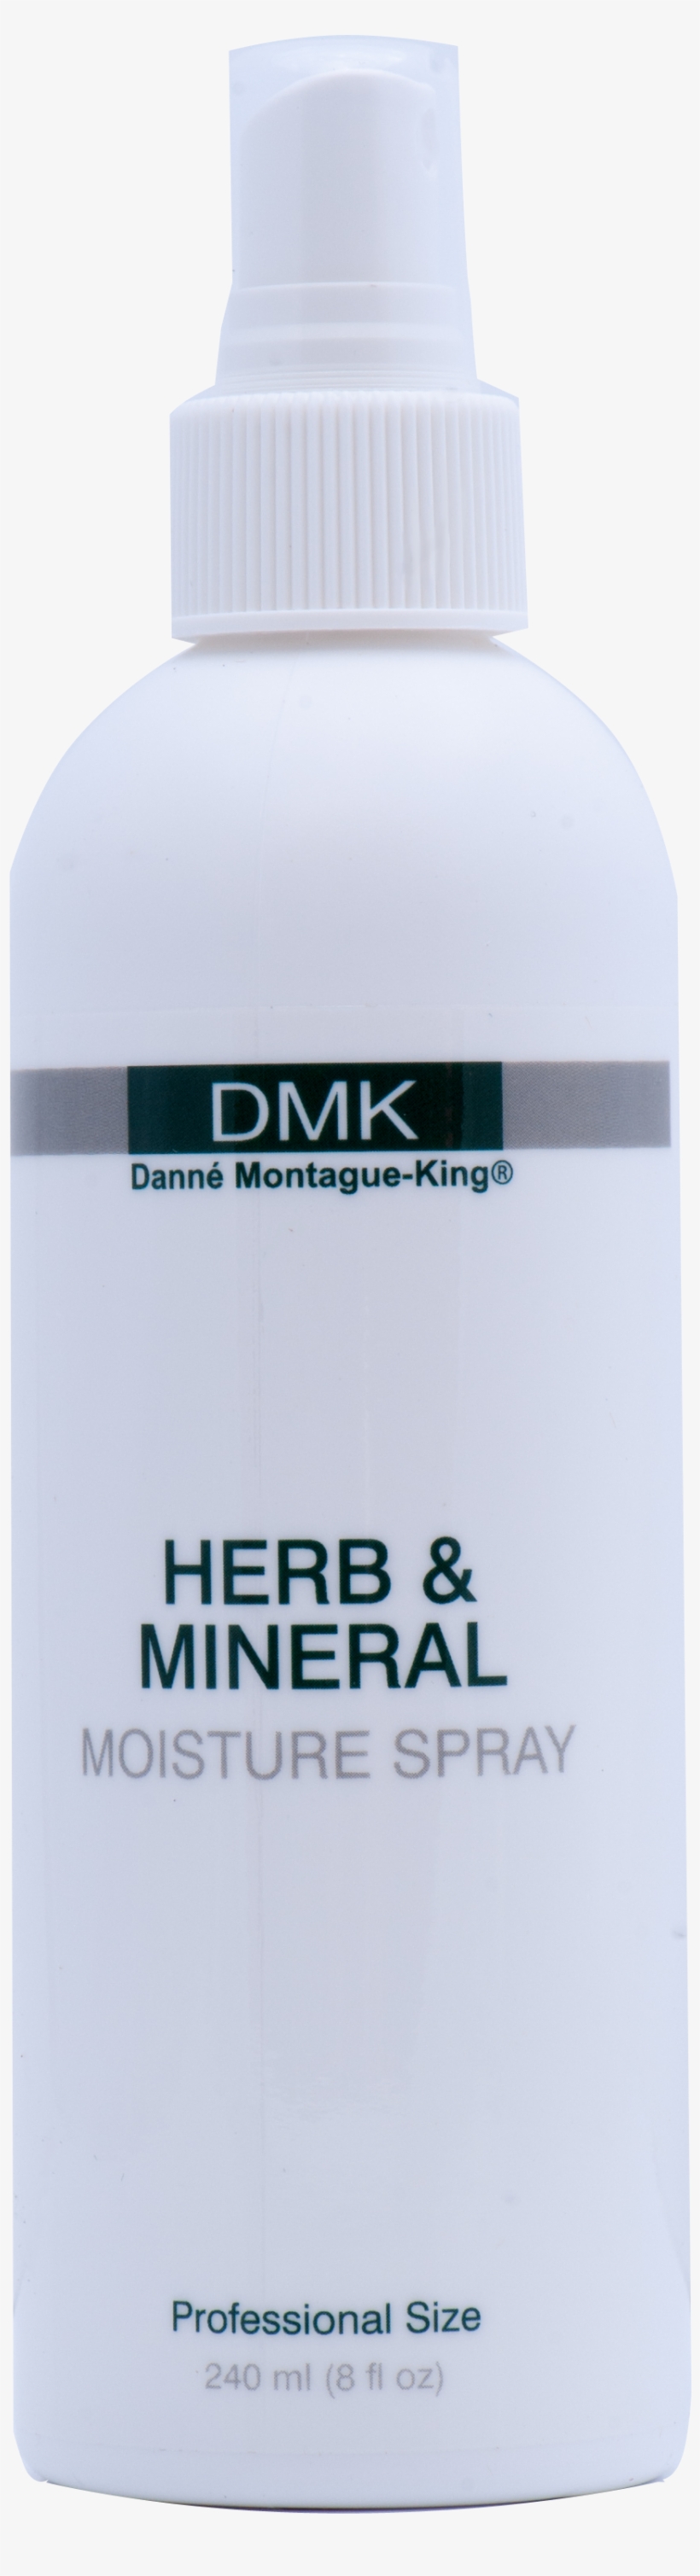 Dmk Herb & Mineral Mist - Dmk Seba-e Mist Oil, transparent png #2631372